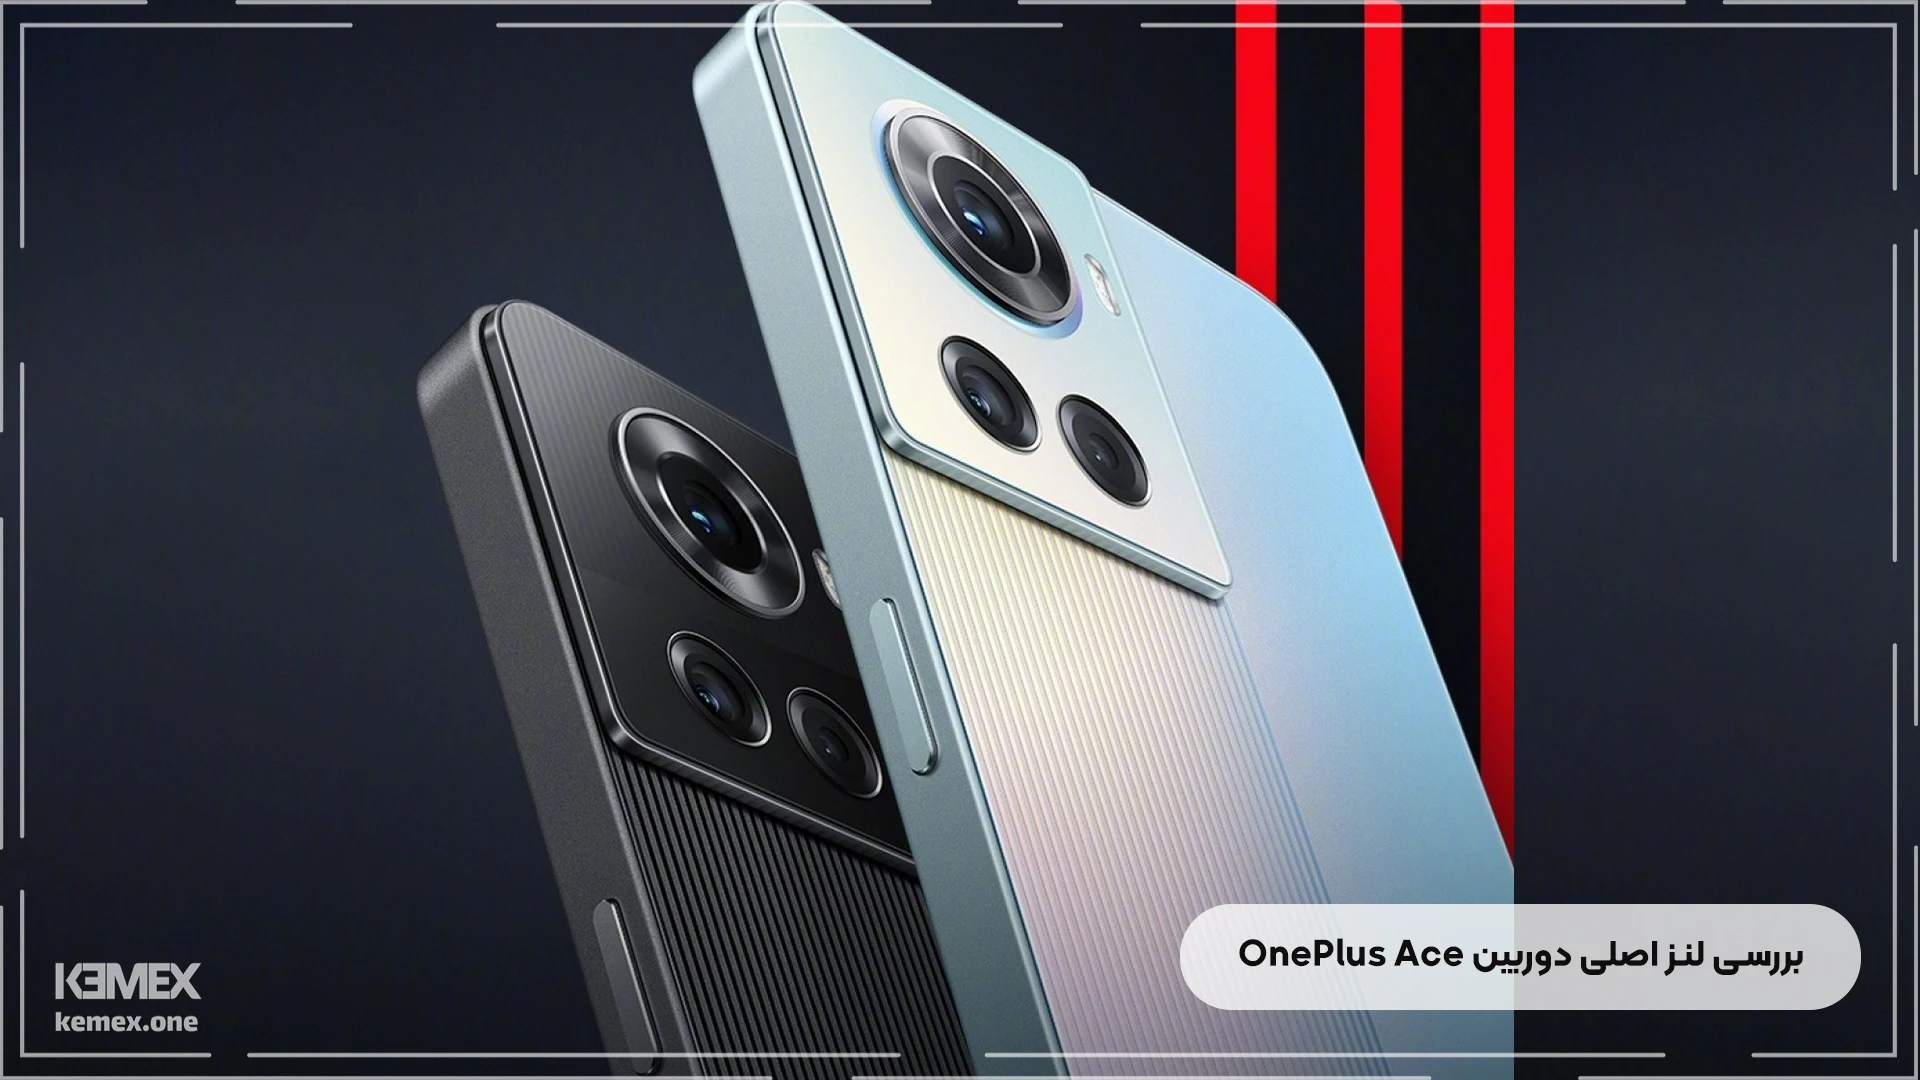 بررسی لنز اصلی دوربین OnePlus Ace